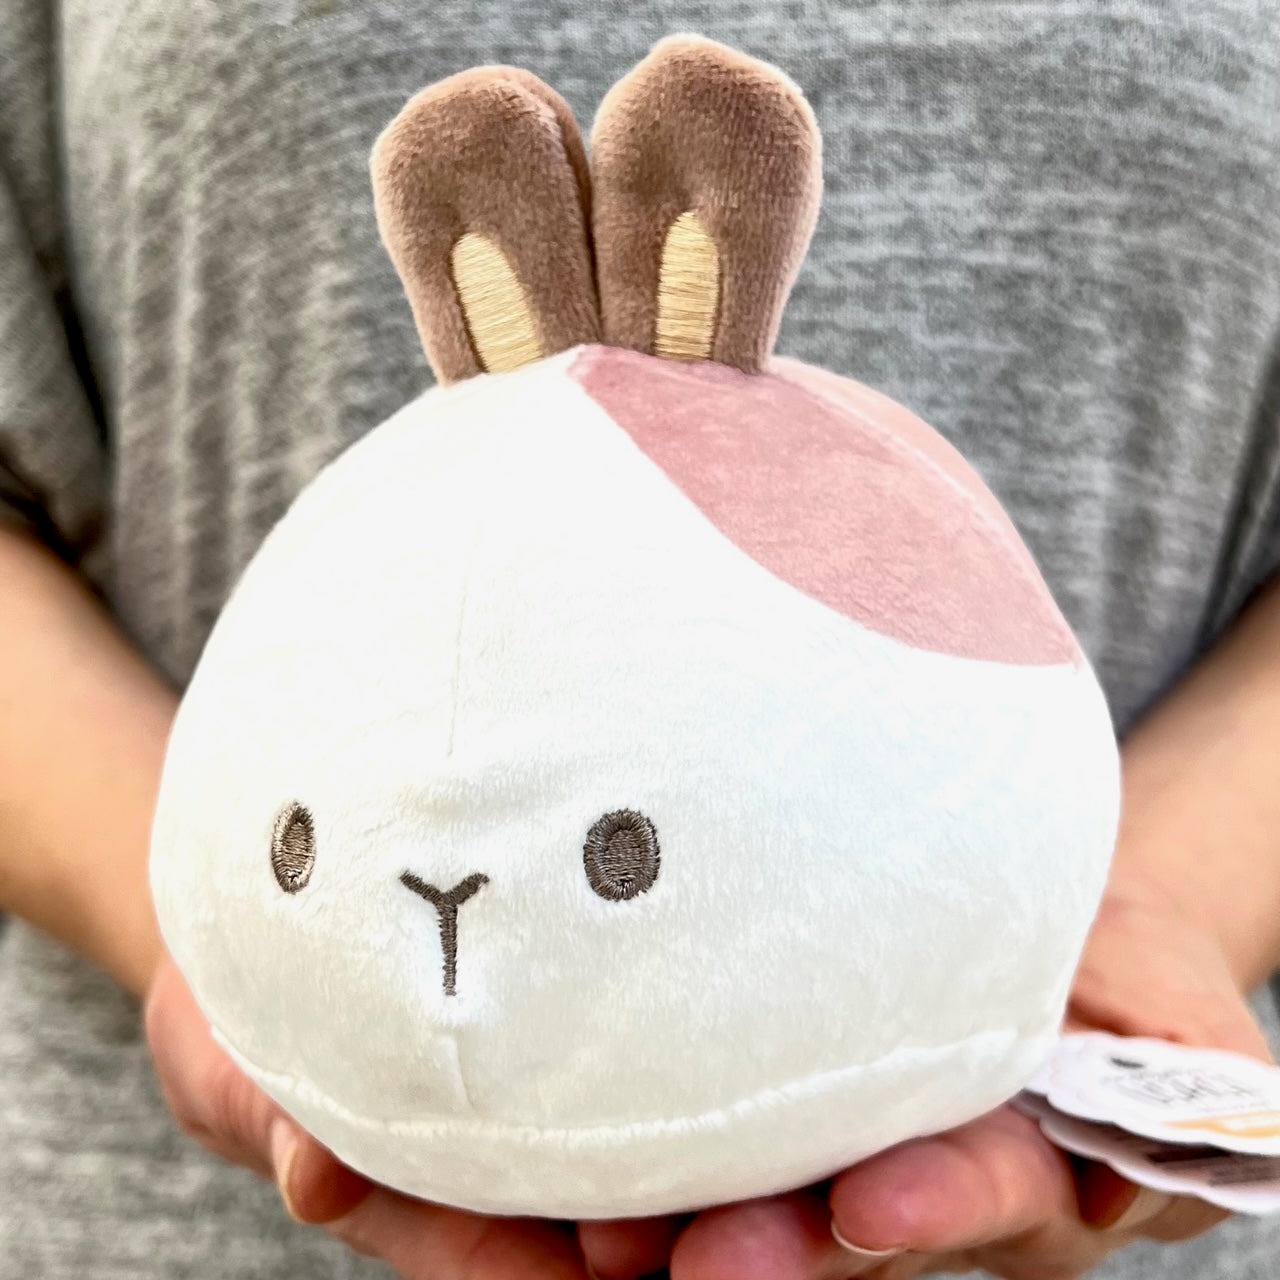 Kids Preferred 6" Plush Bunny round Cuddle Pal Rabbit Stuffed Animal  Toy